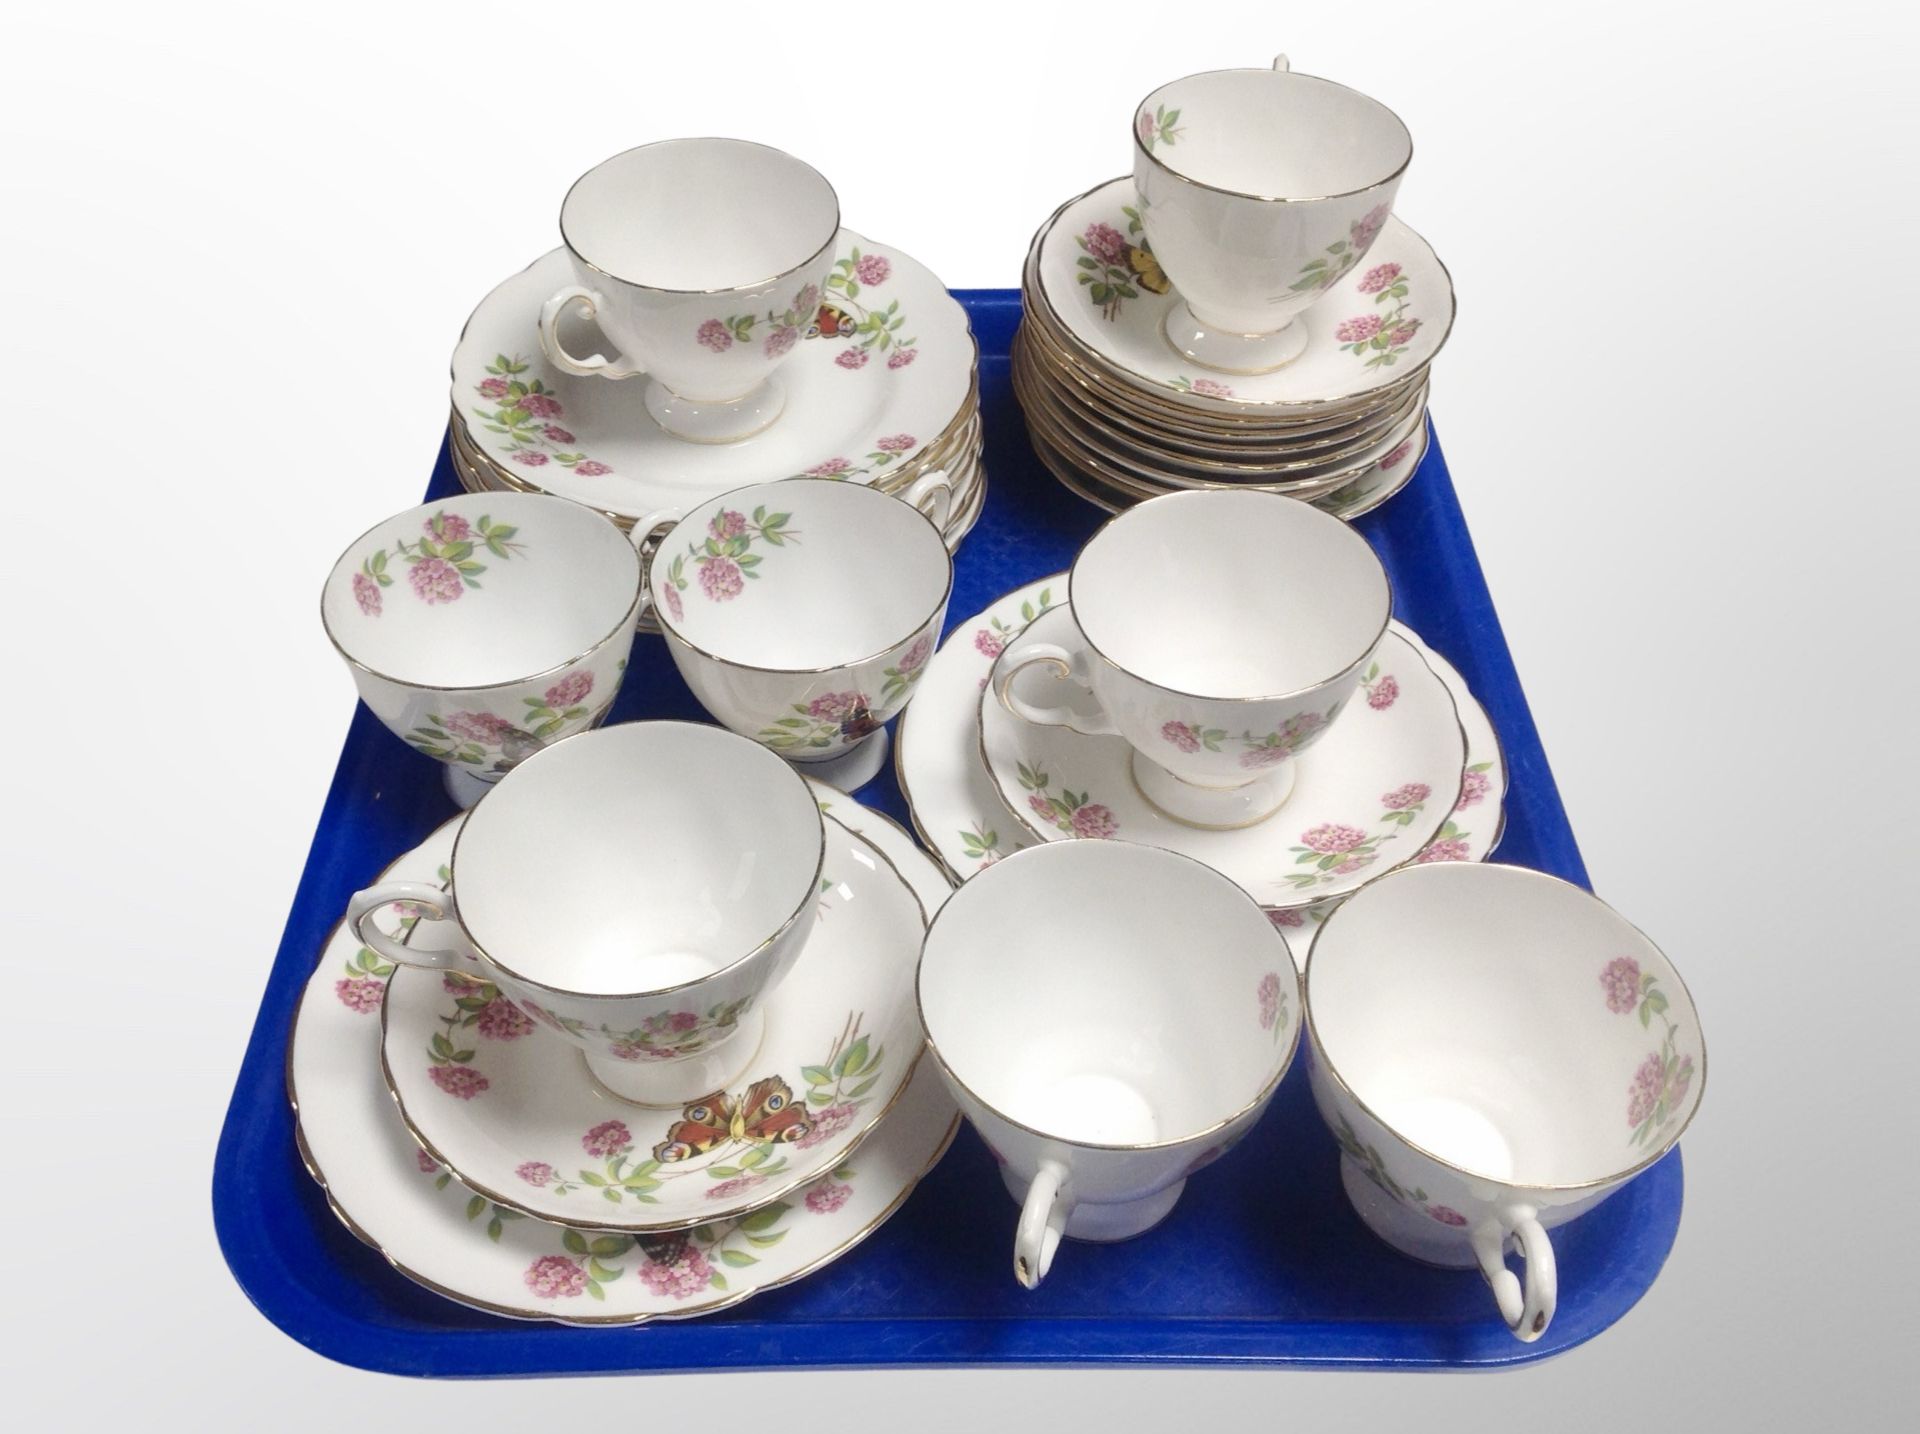 Thirty pieces of Tuscan June glory tea china